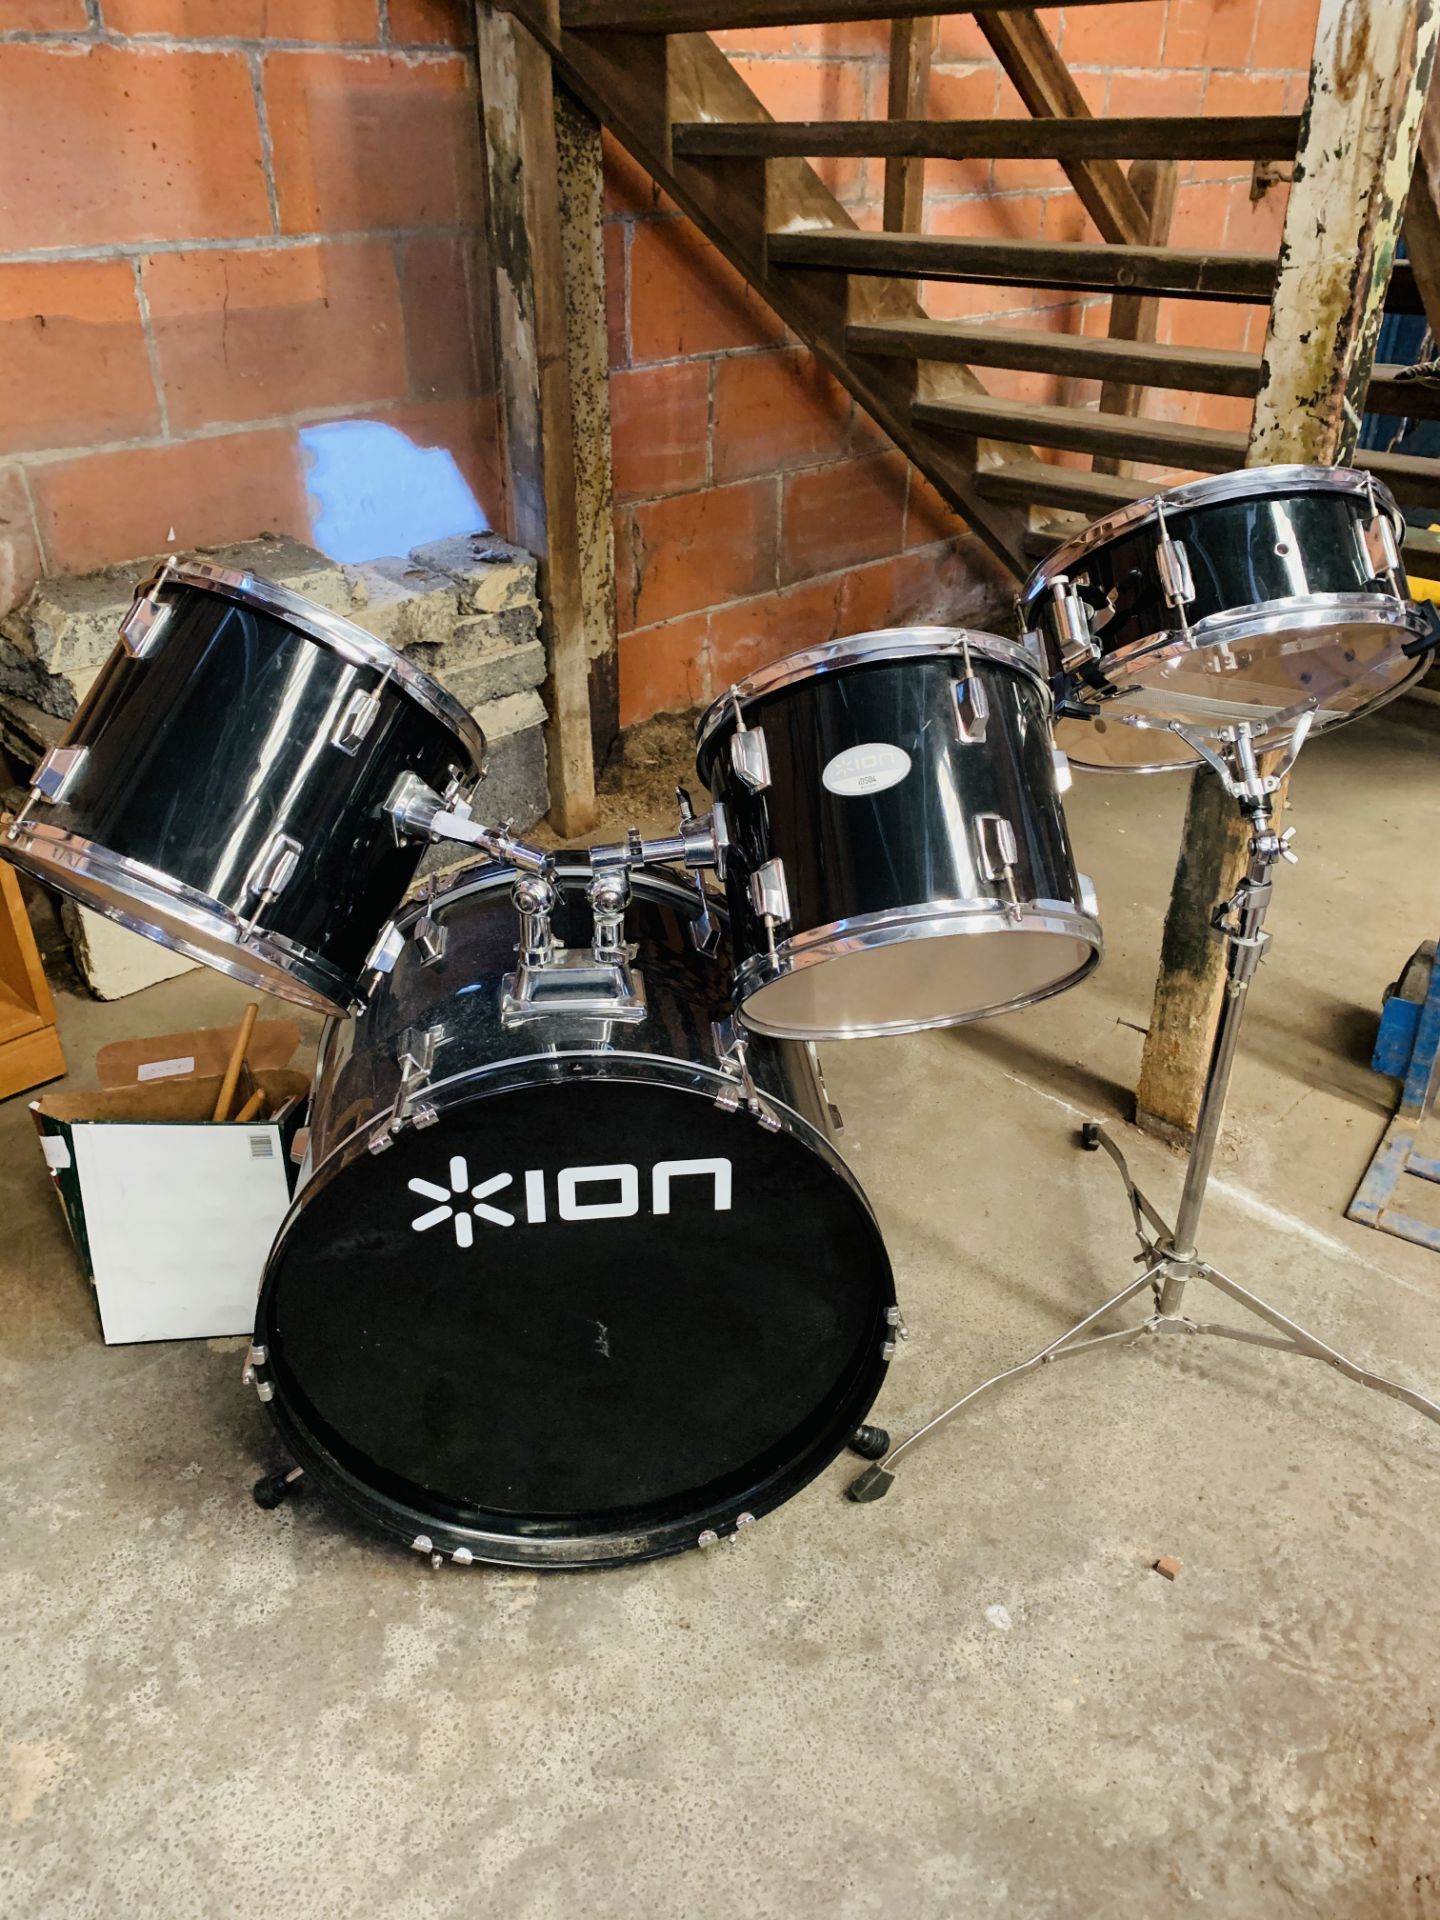 Ixon 4 drum kit.